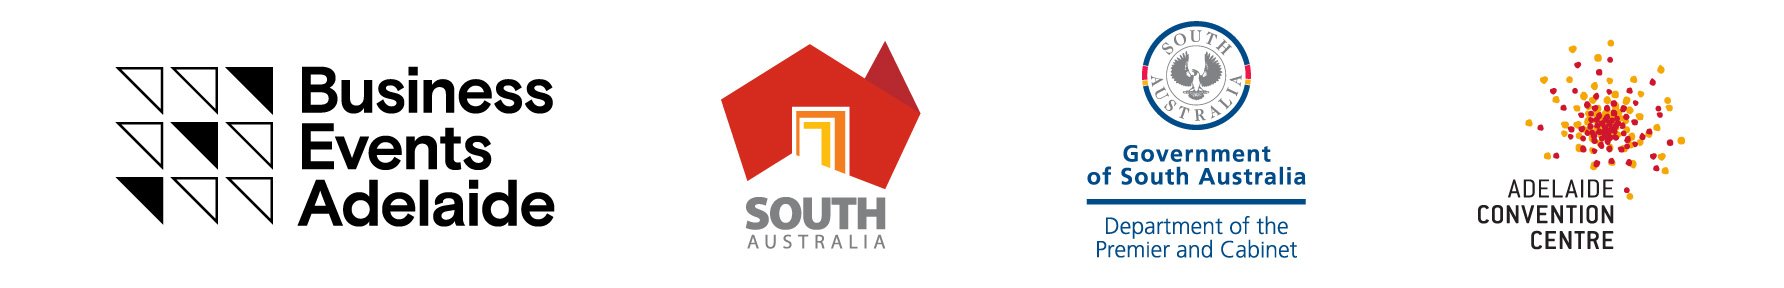 Logos for Business Events Adelaide, SA, GSA, ACC.